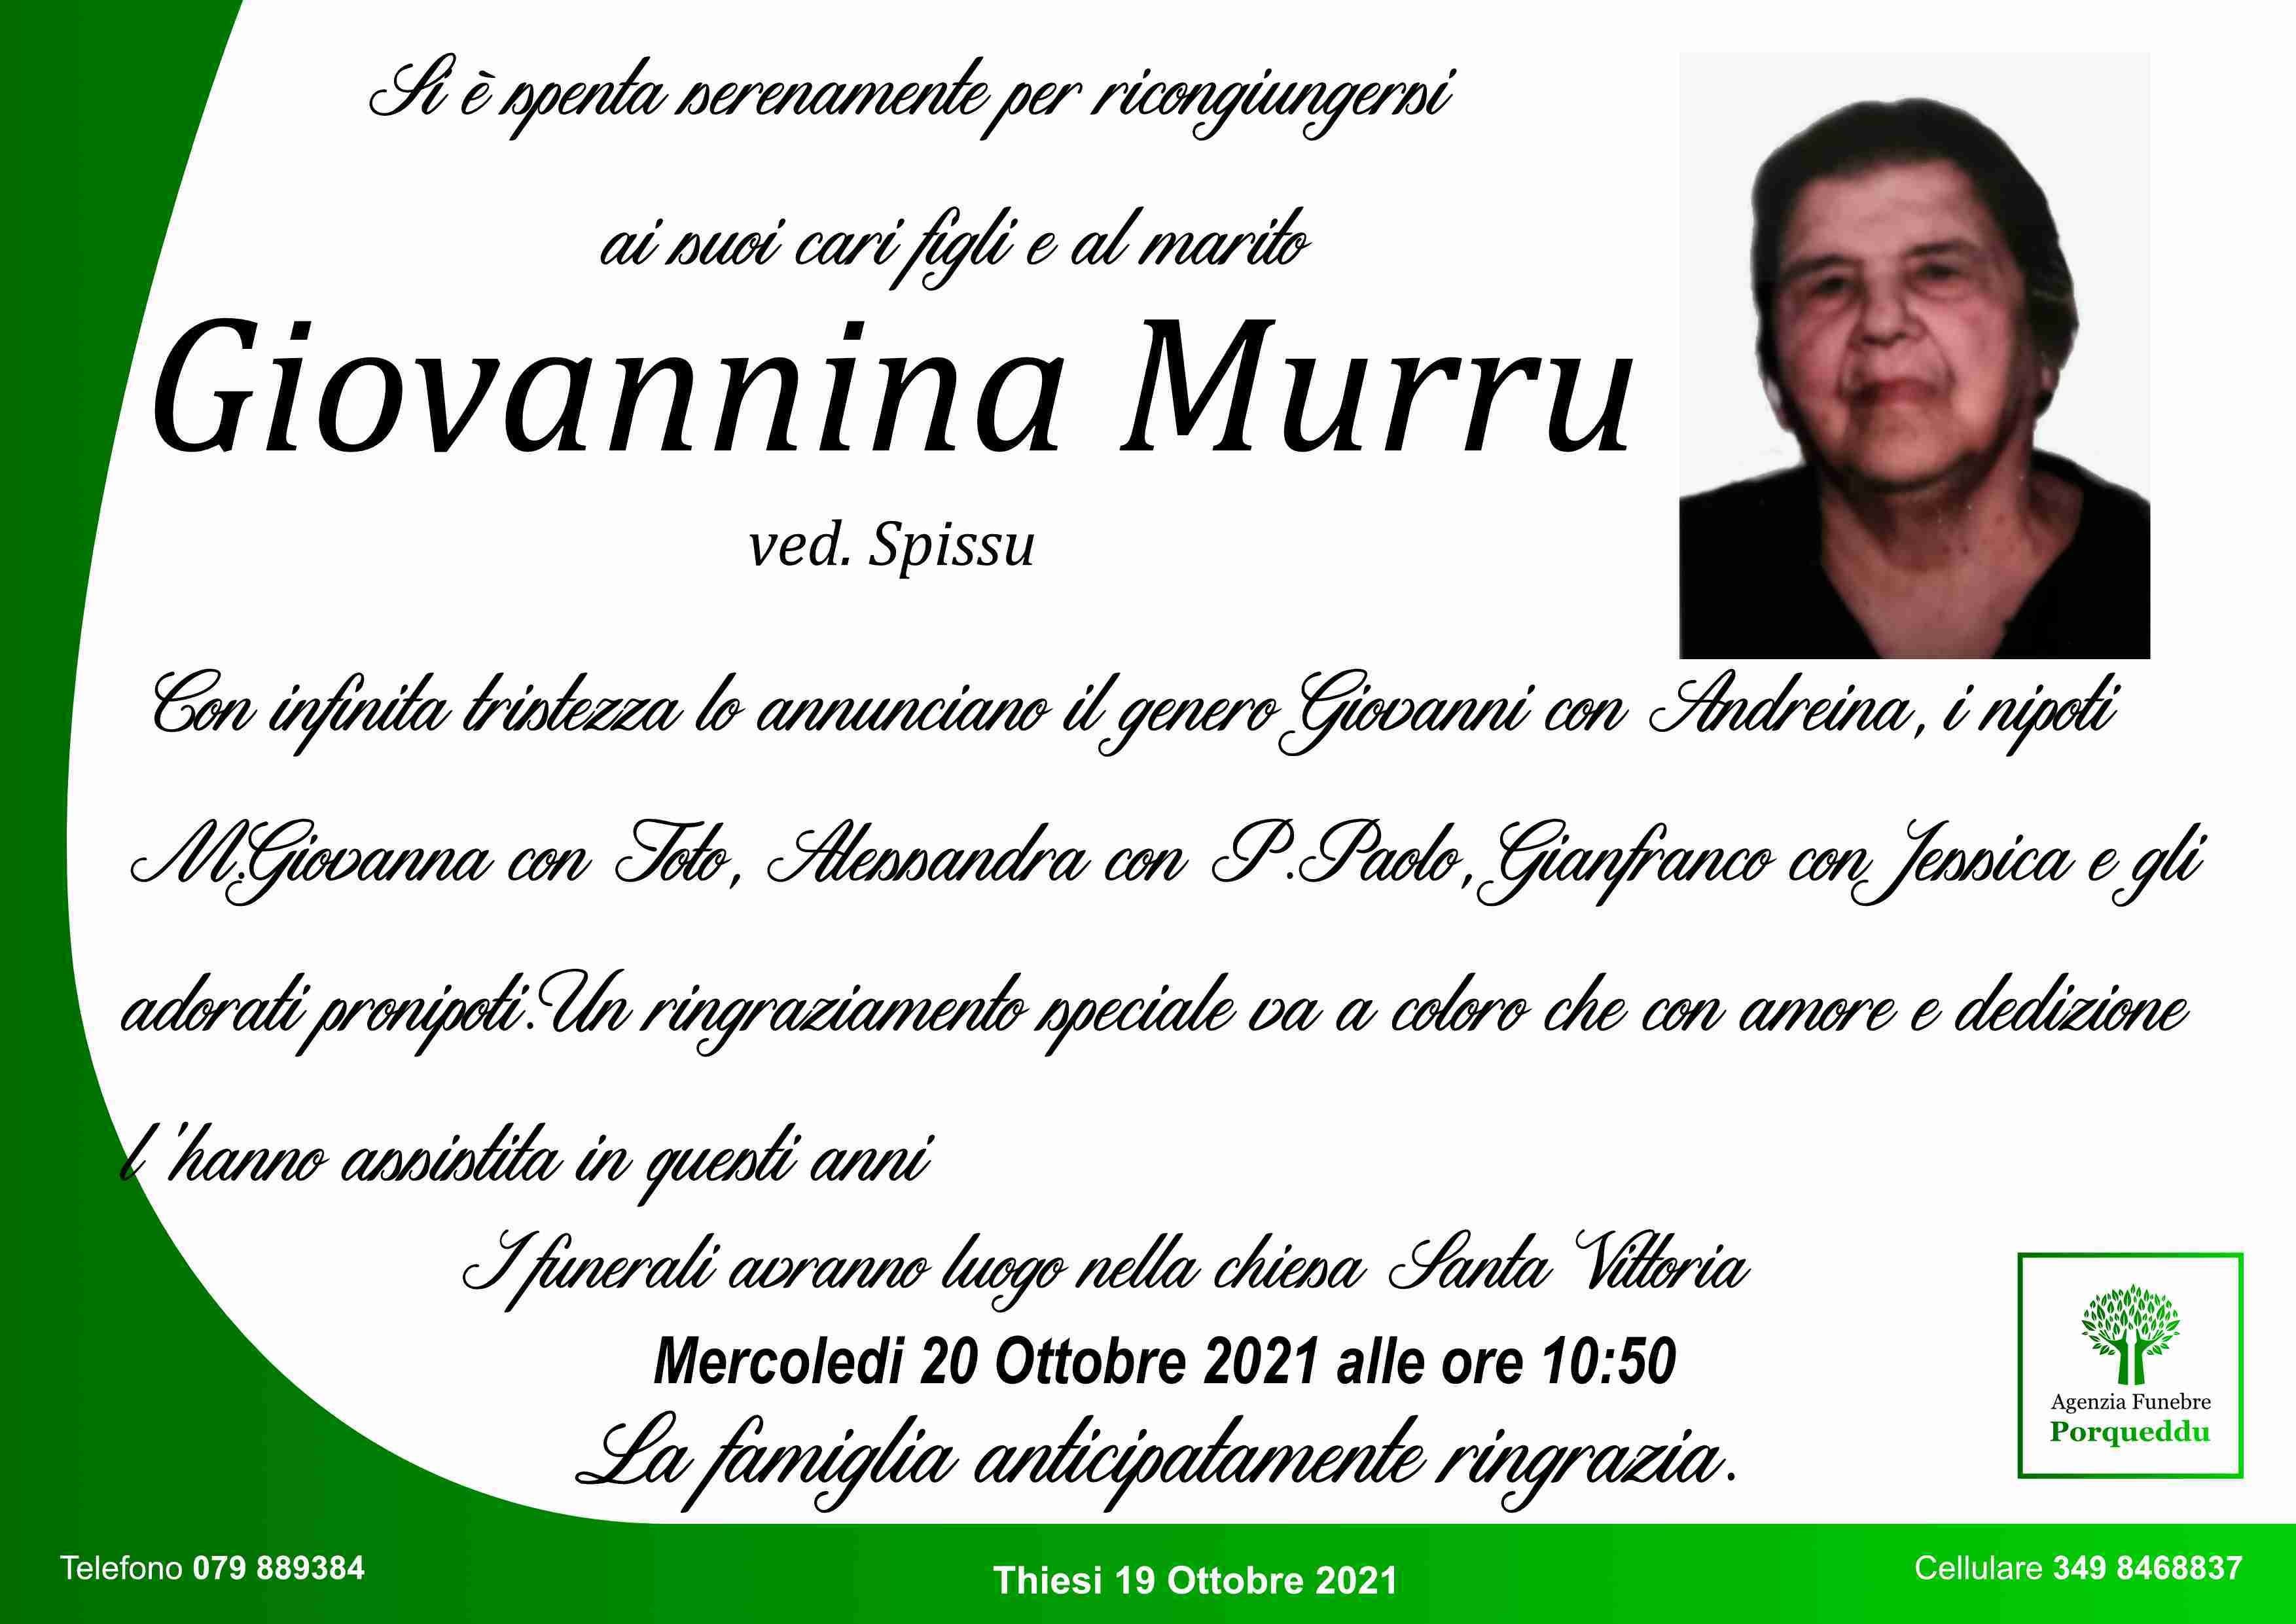 Giovannina Murru